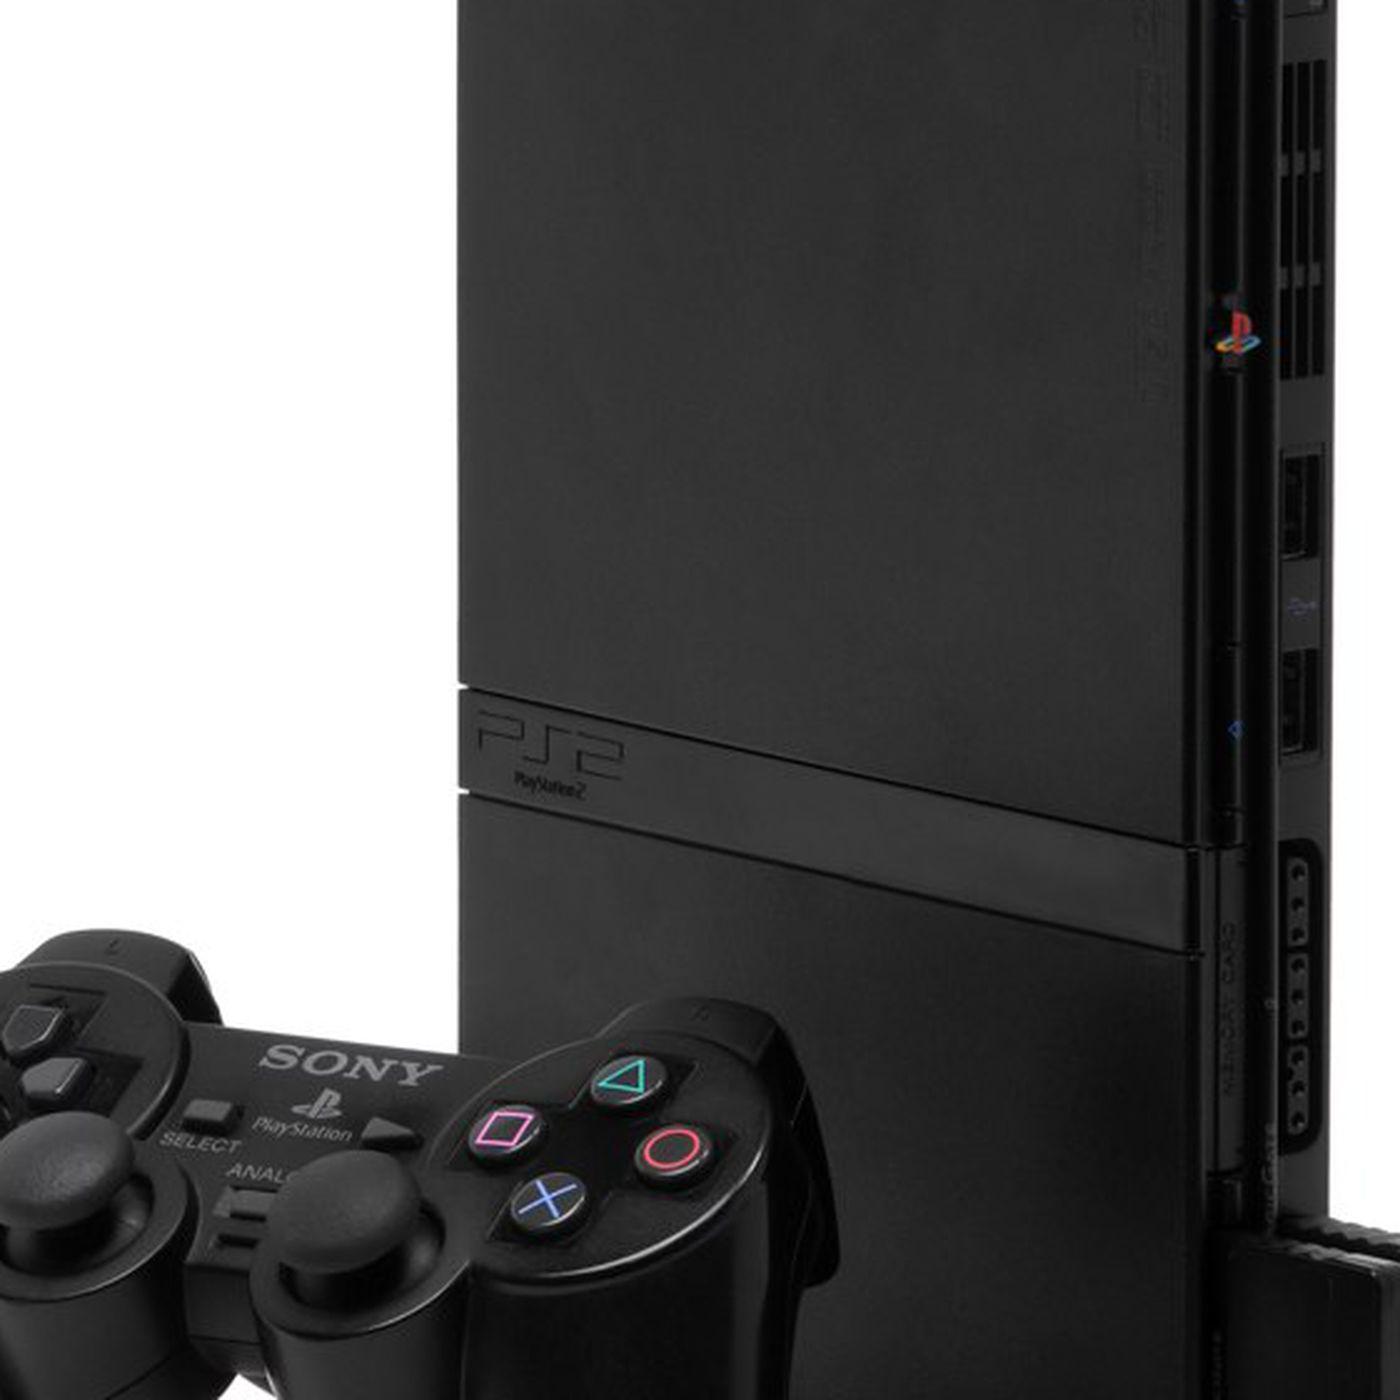 Status Symbols: Sony PlayStation 2